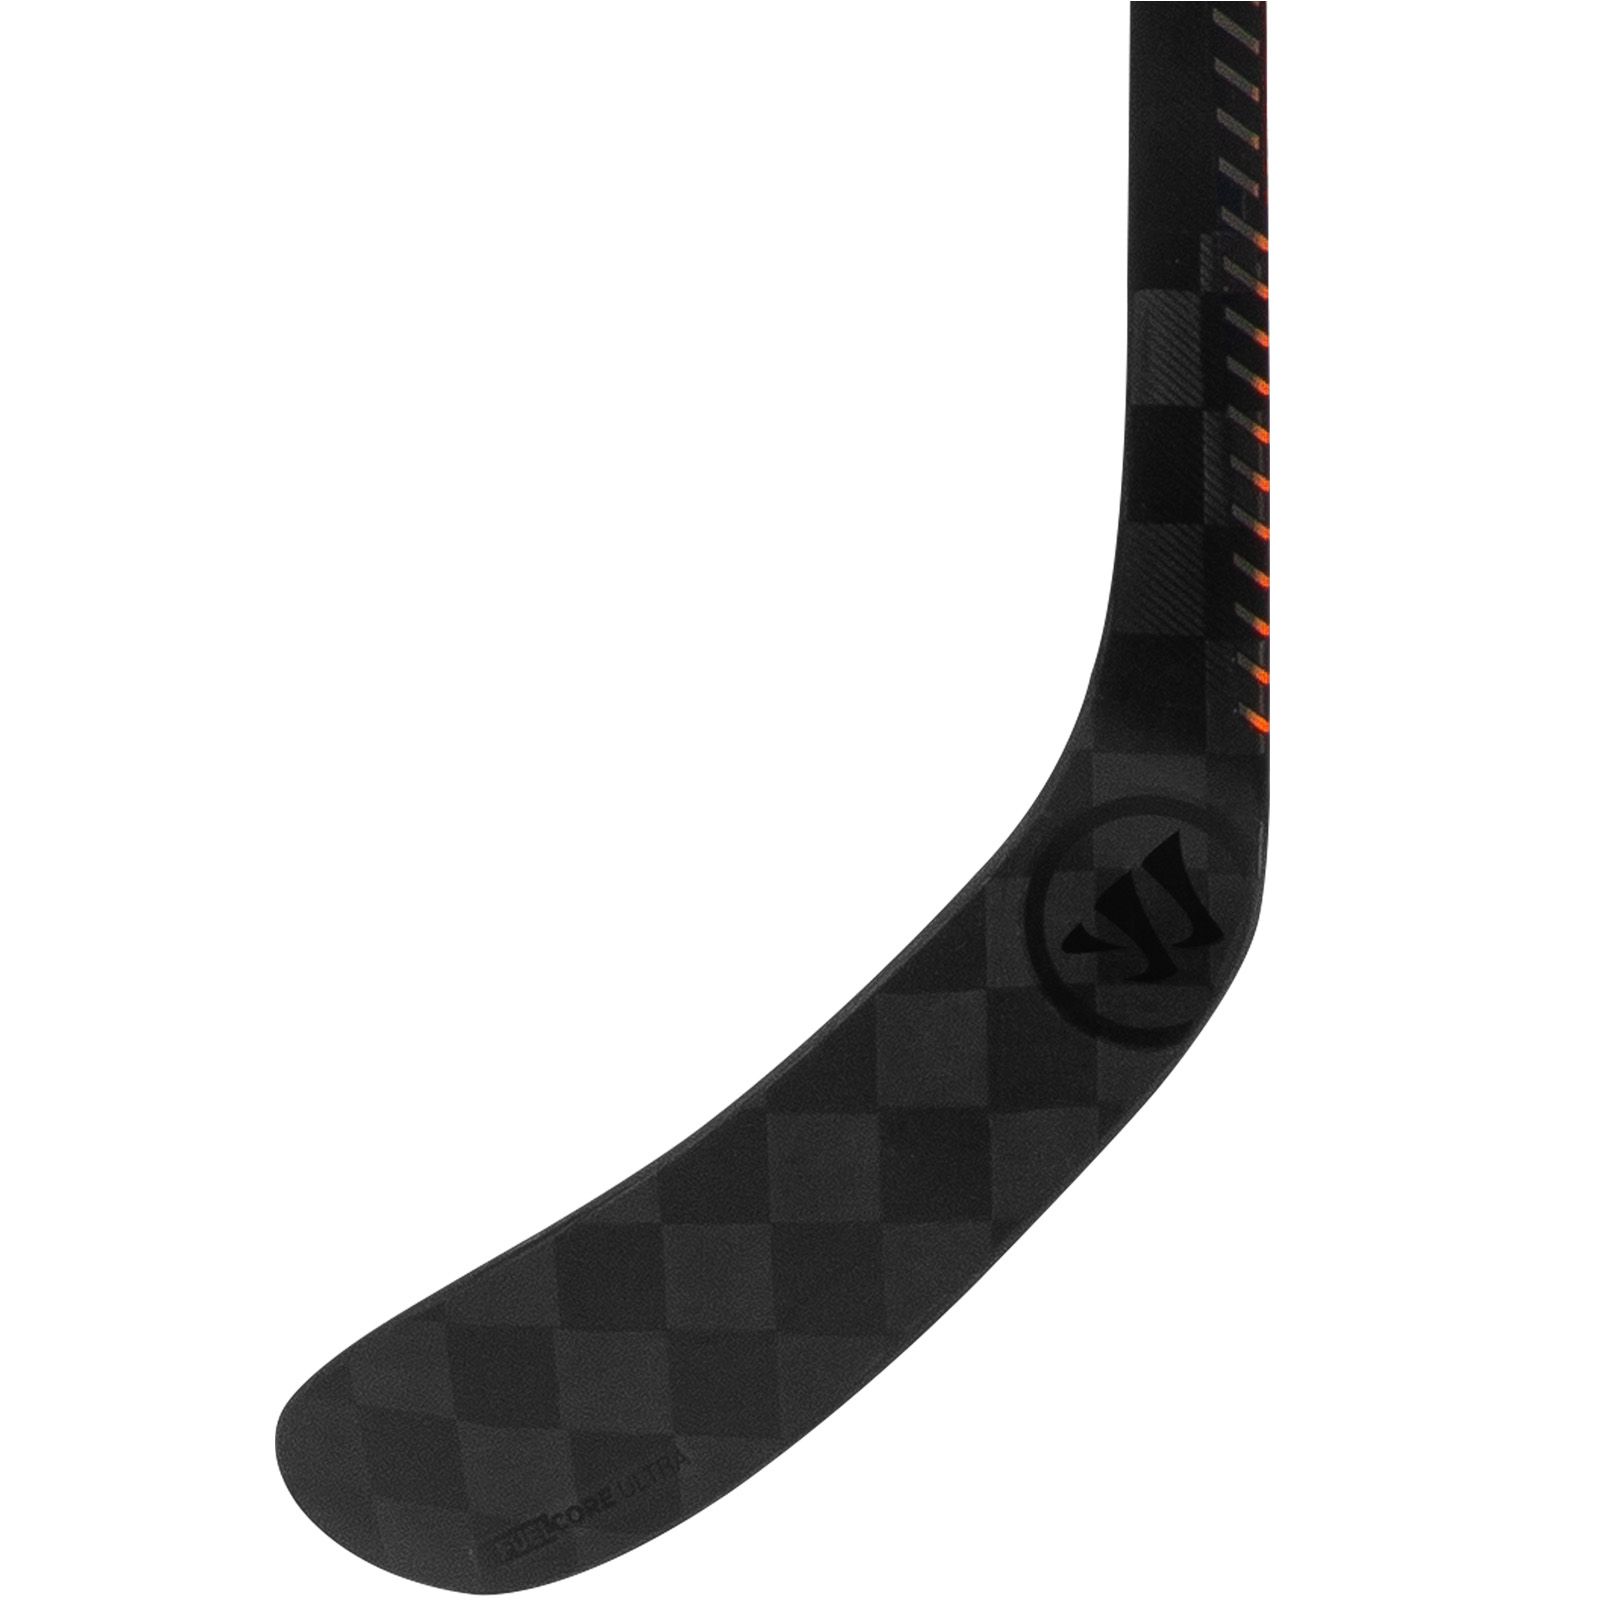 Warrior Covert QR5 Pro Ice 63 In. Hockey Stick - Senior